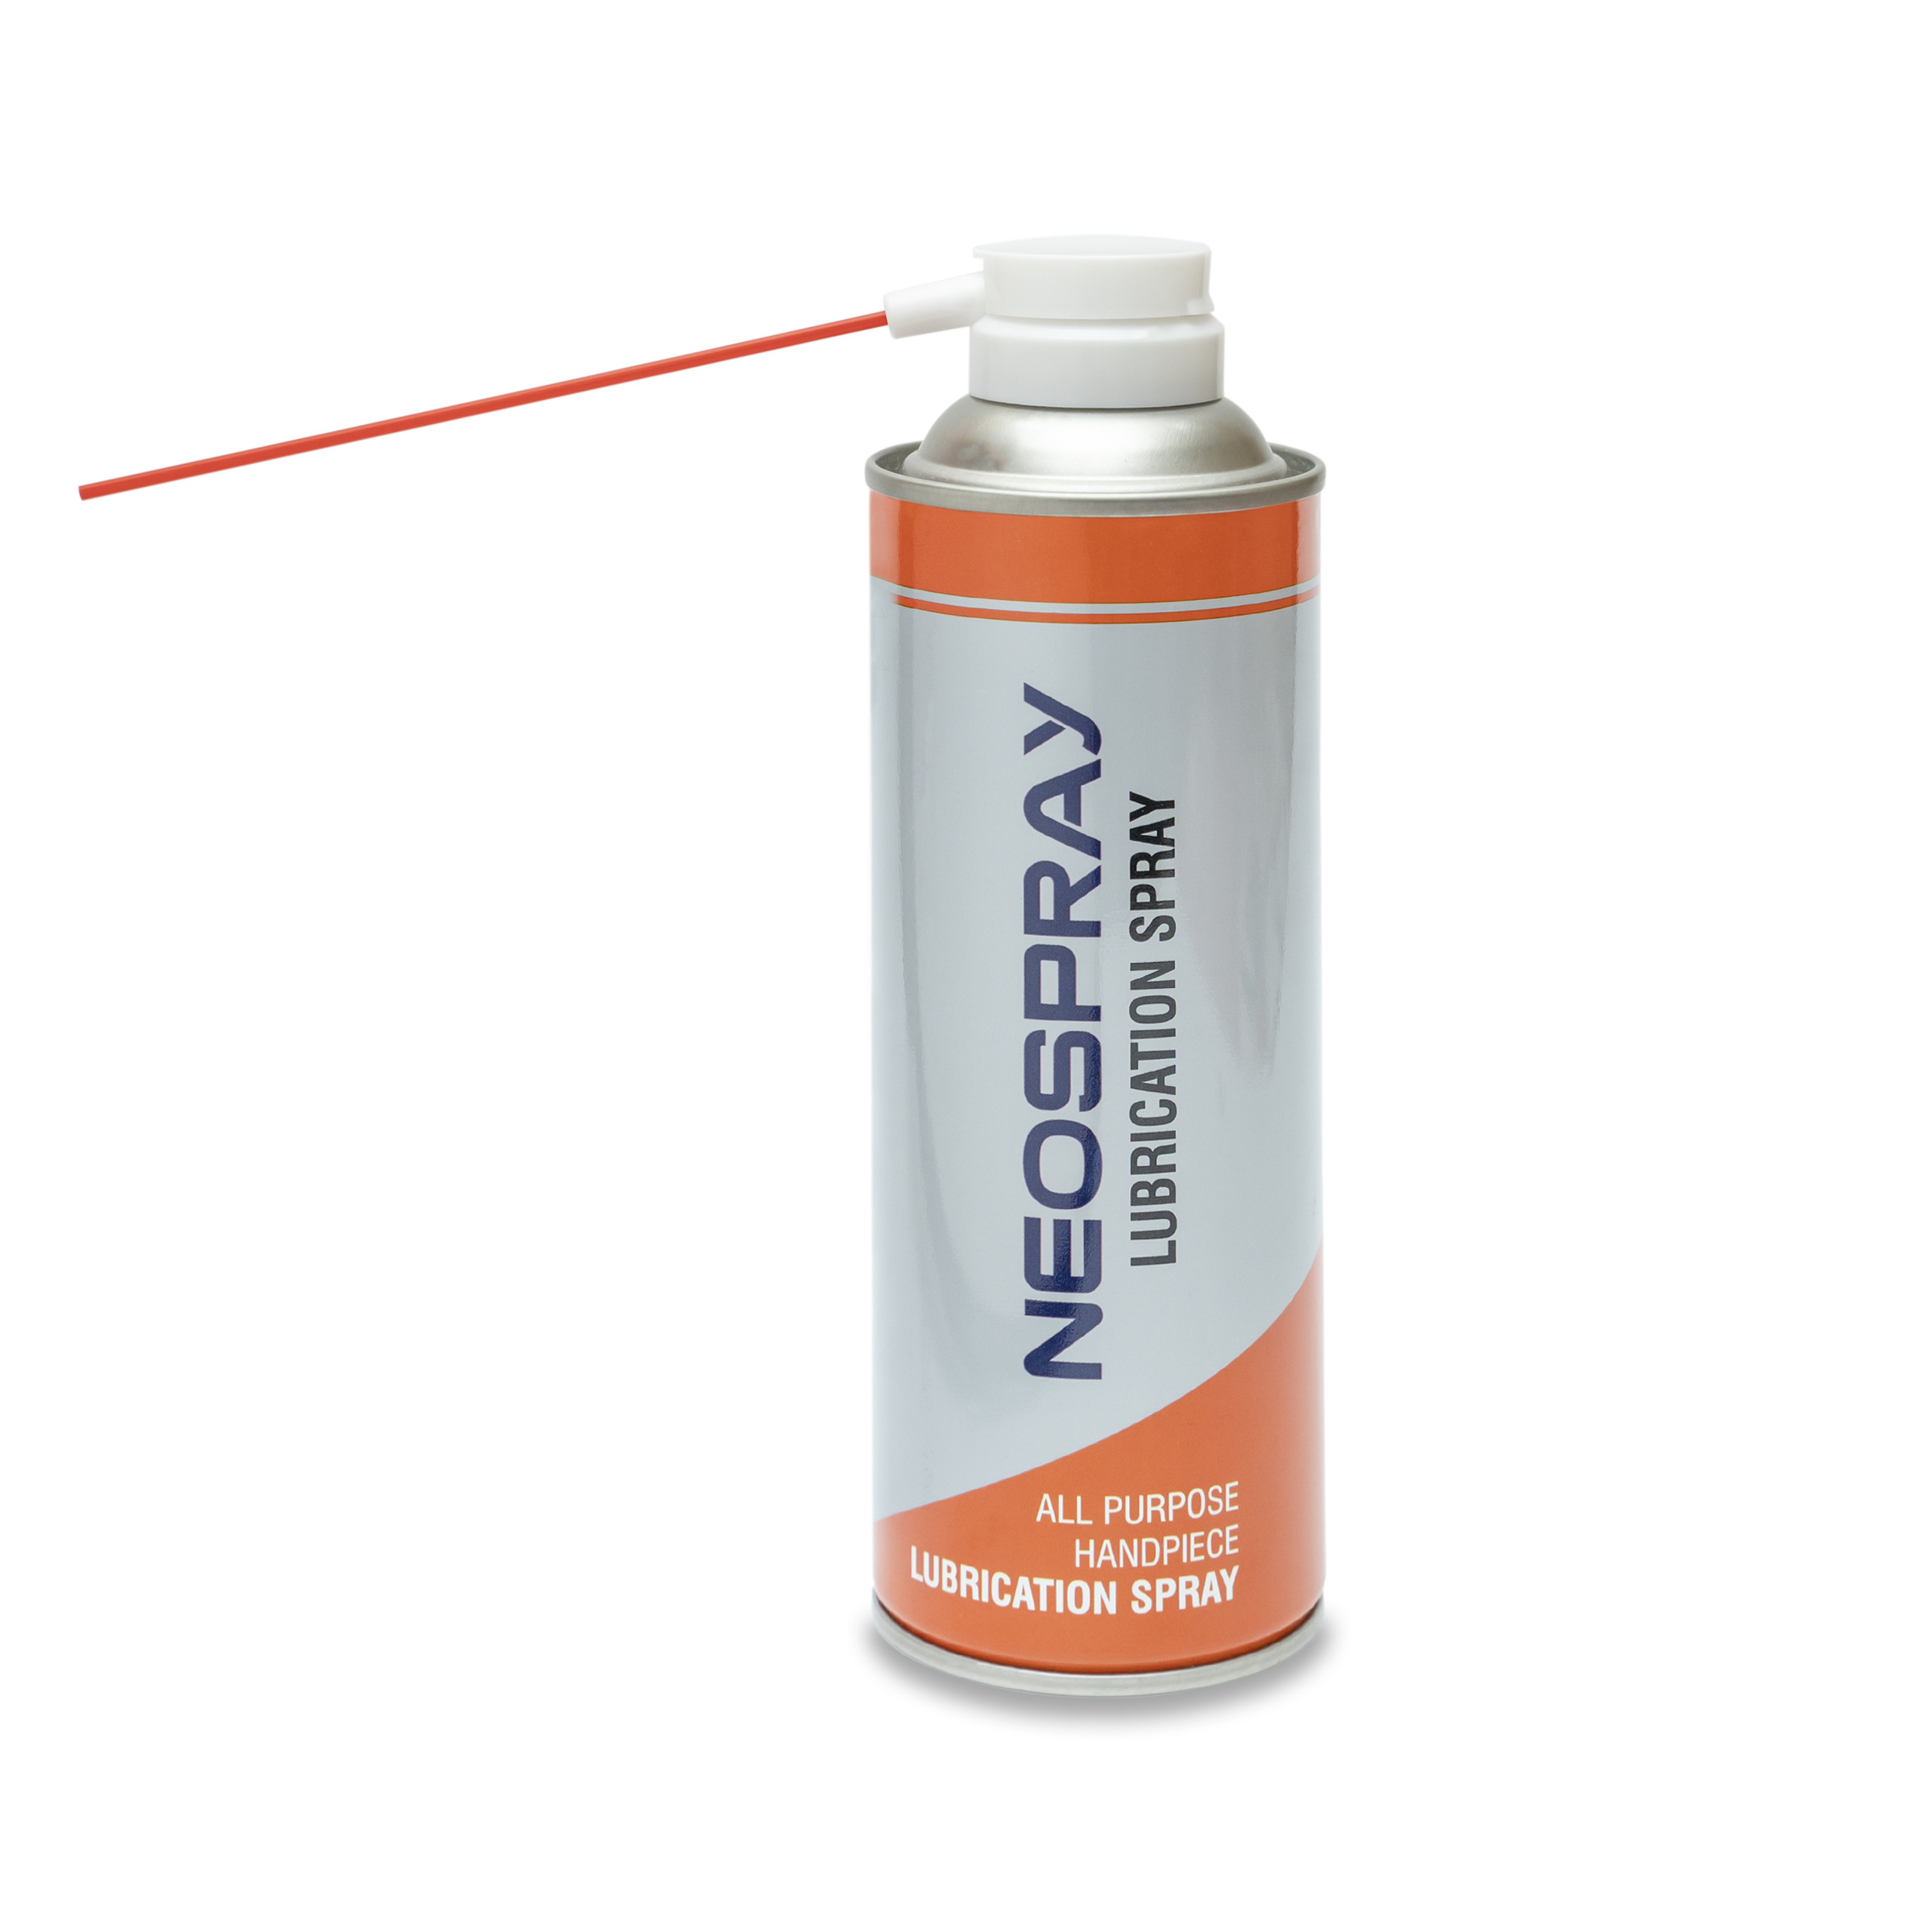 Neospray Lubrication Spray